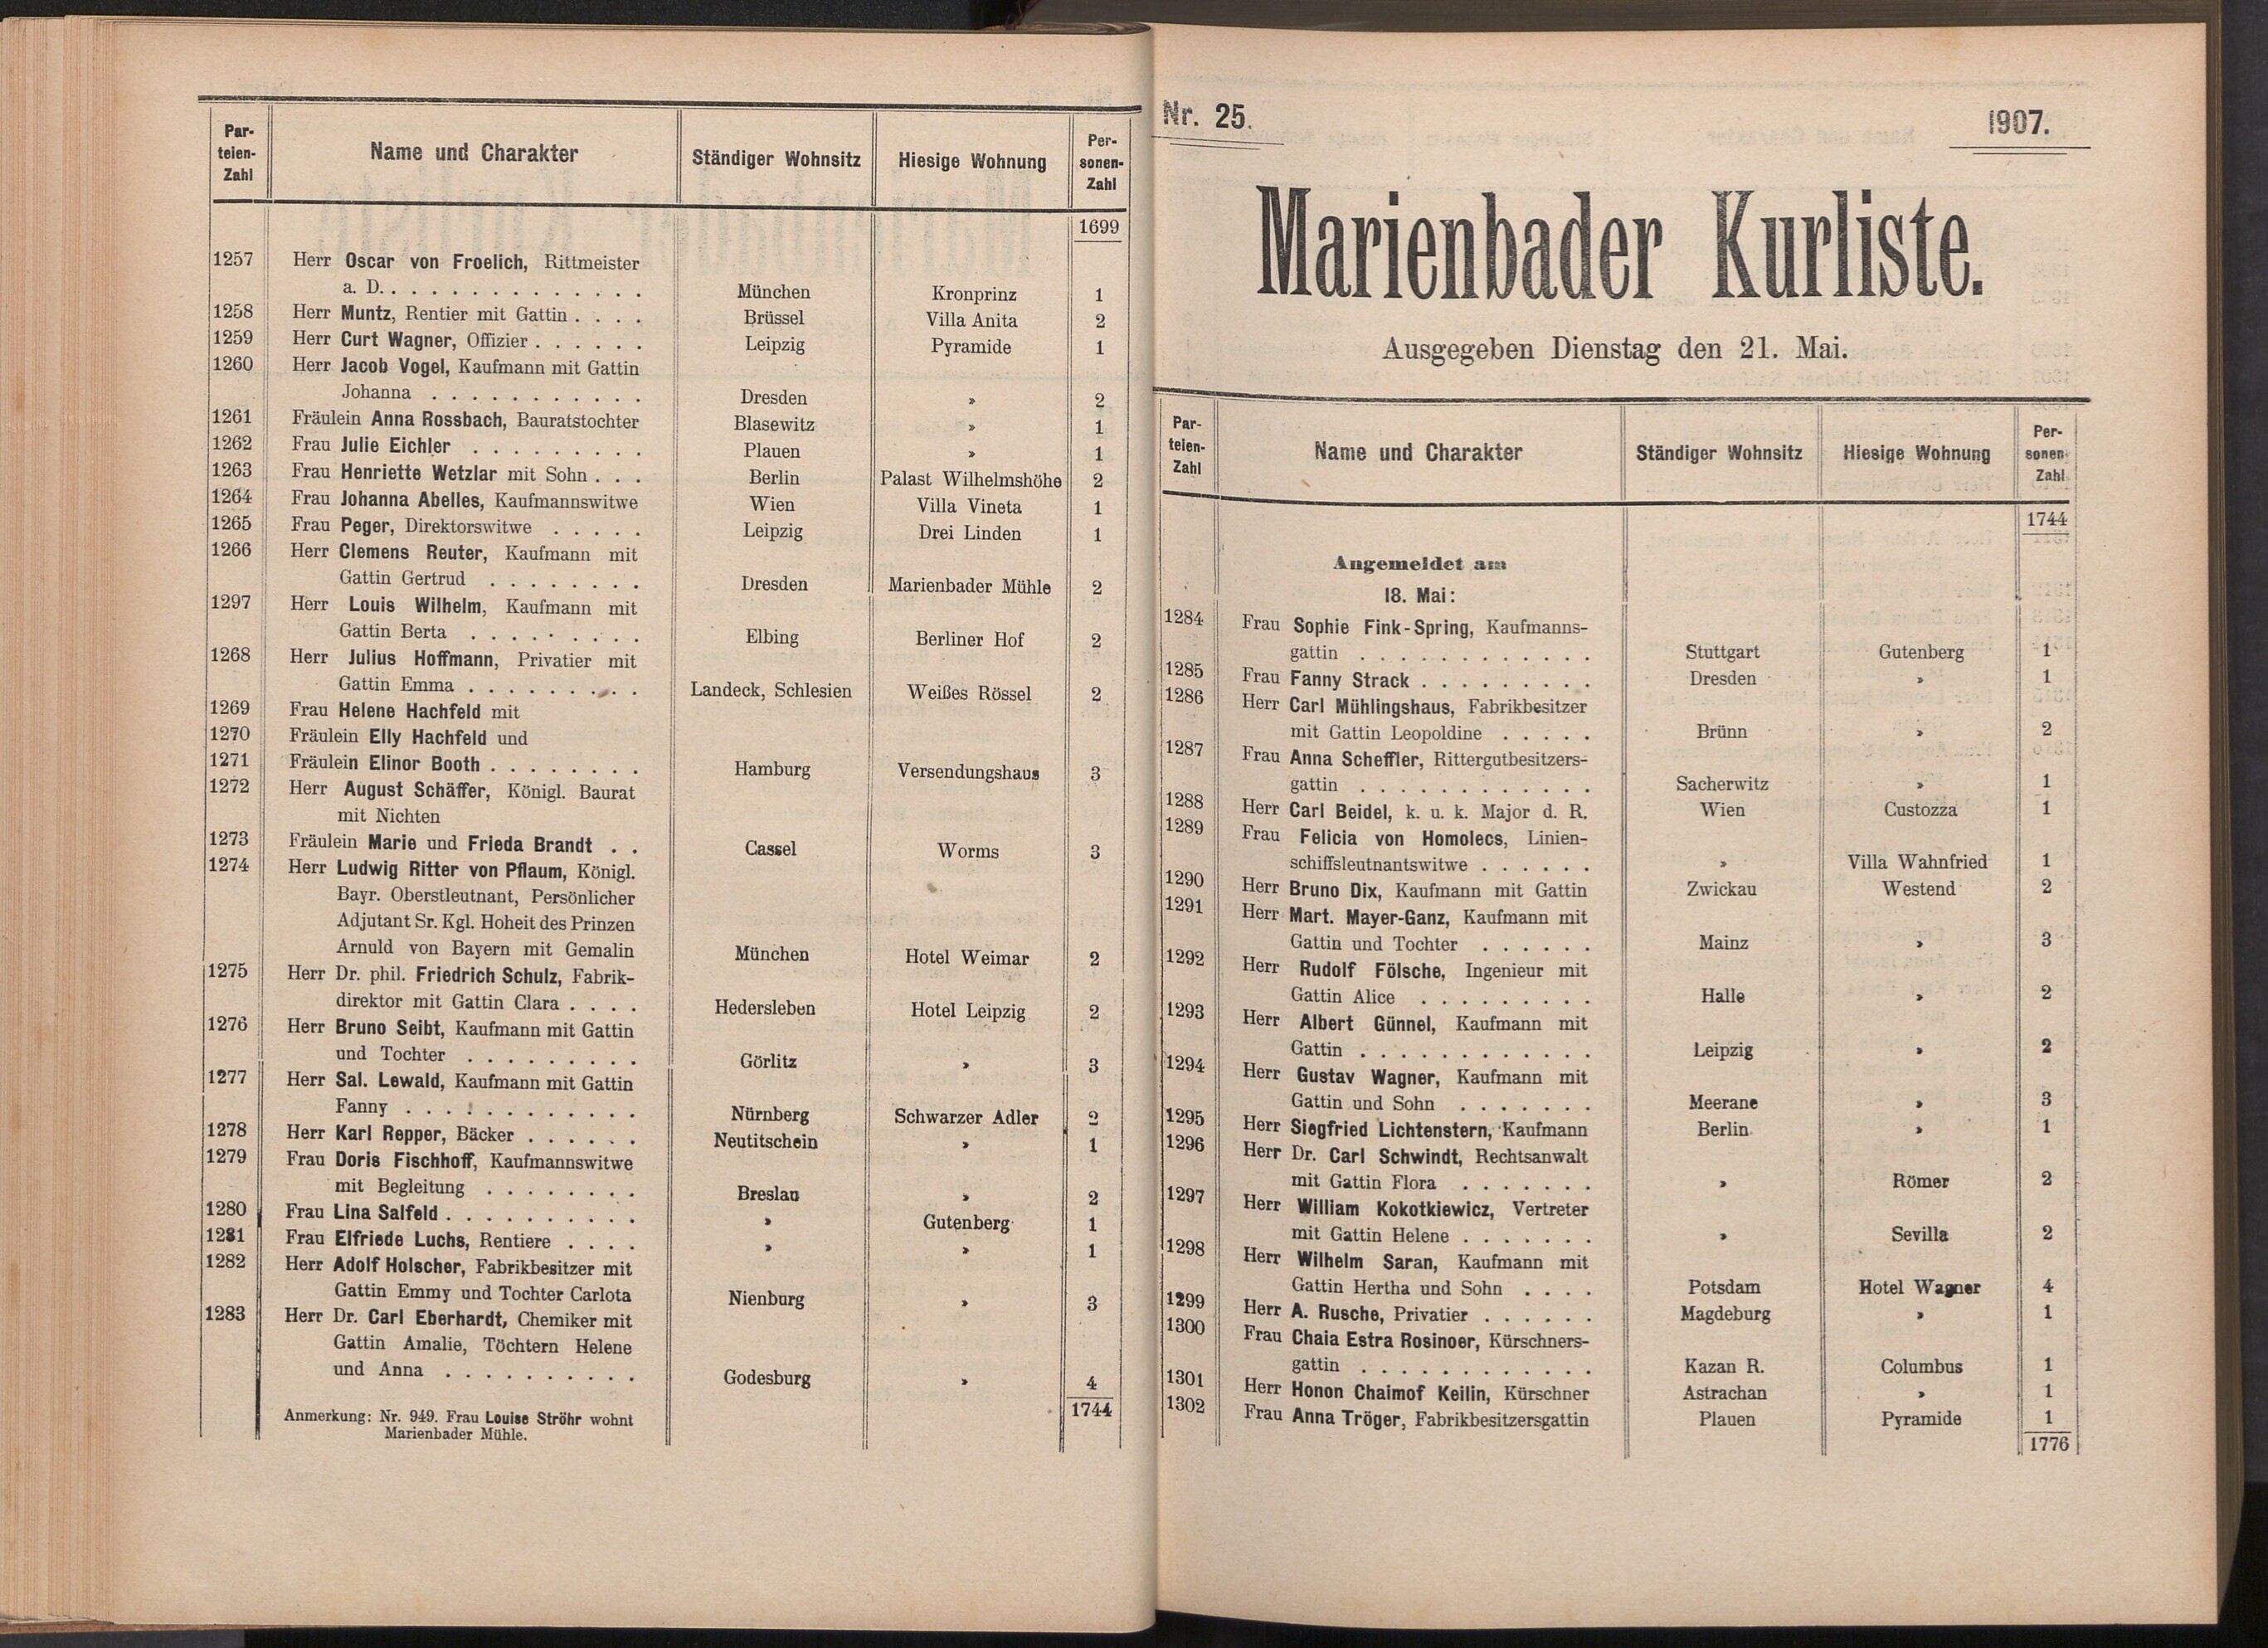 39. soap-ch_knihovna_marienbader-kurliste-1907_0390